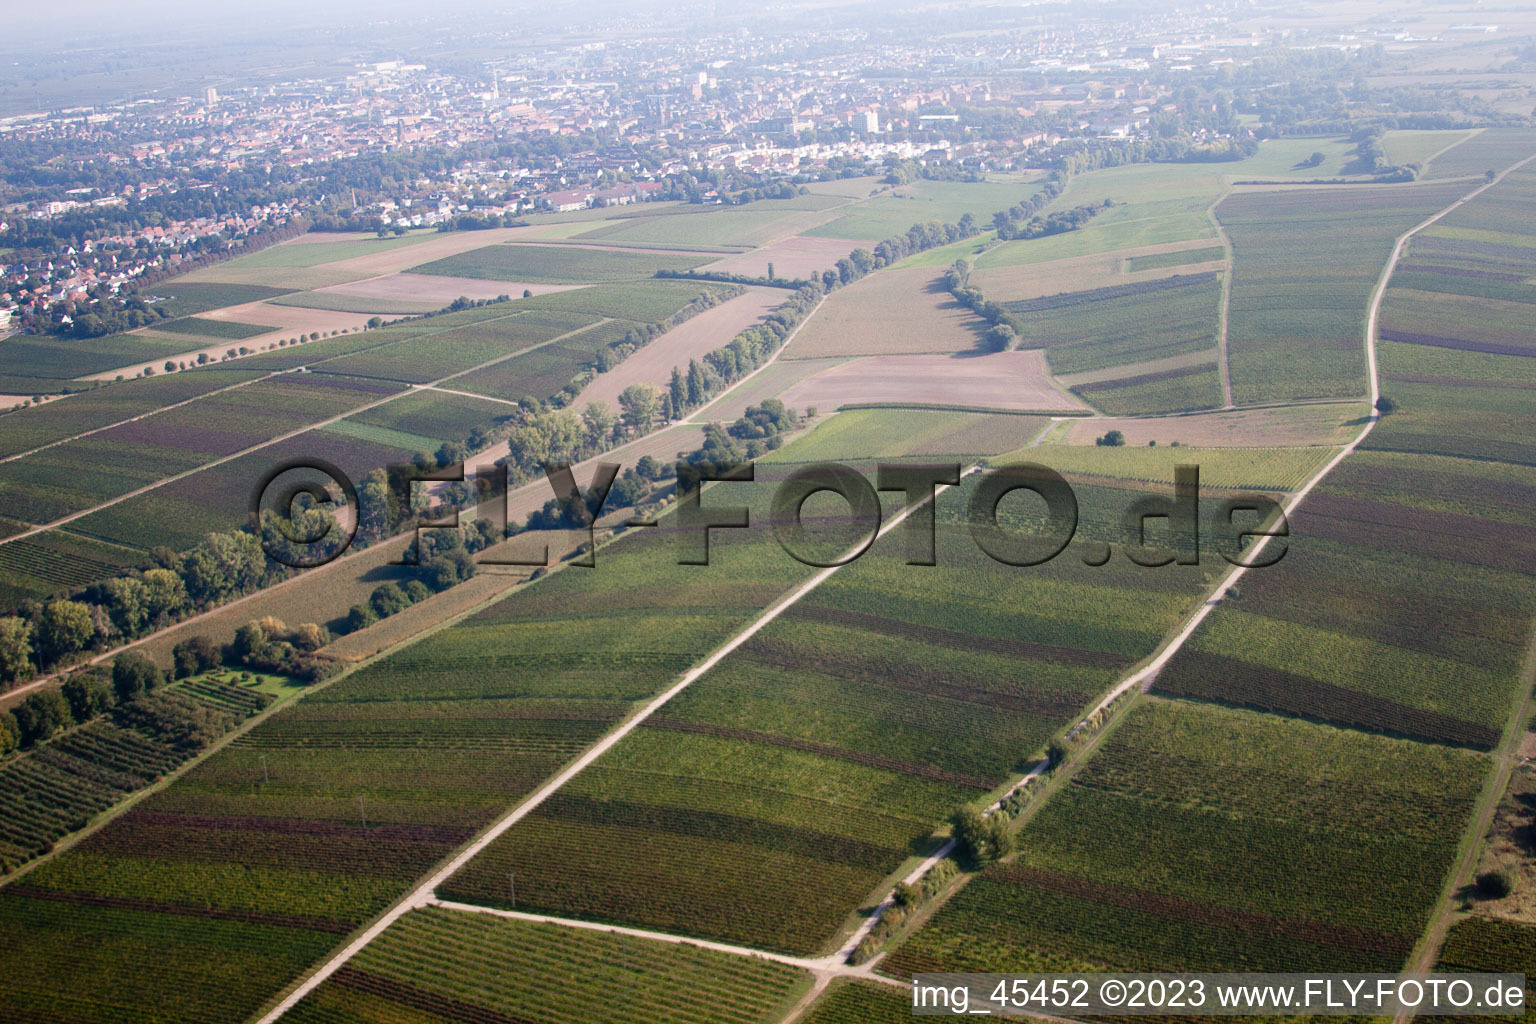 Quartier Mörzheim in Landau in der Pfalz dans le département Rhénanie-Palatinat, Allemagne vu d'un drone